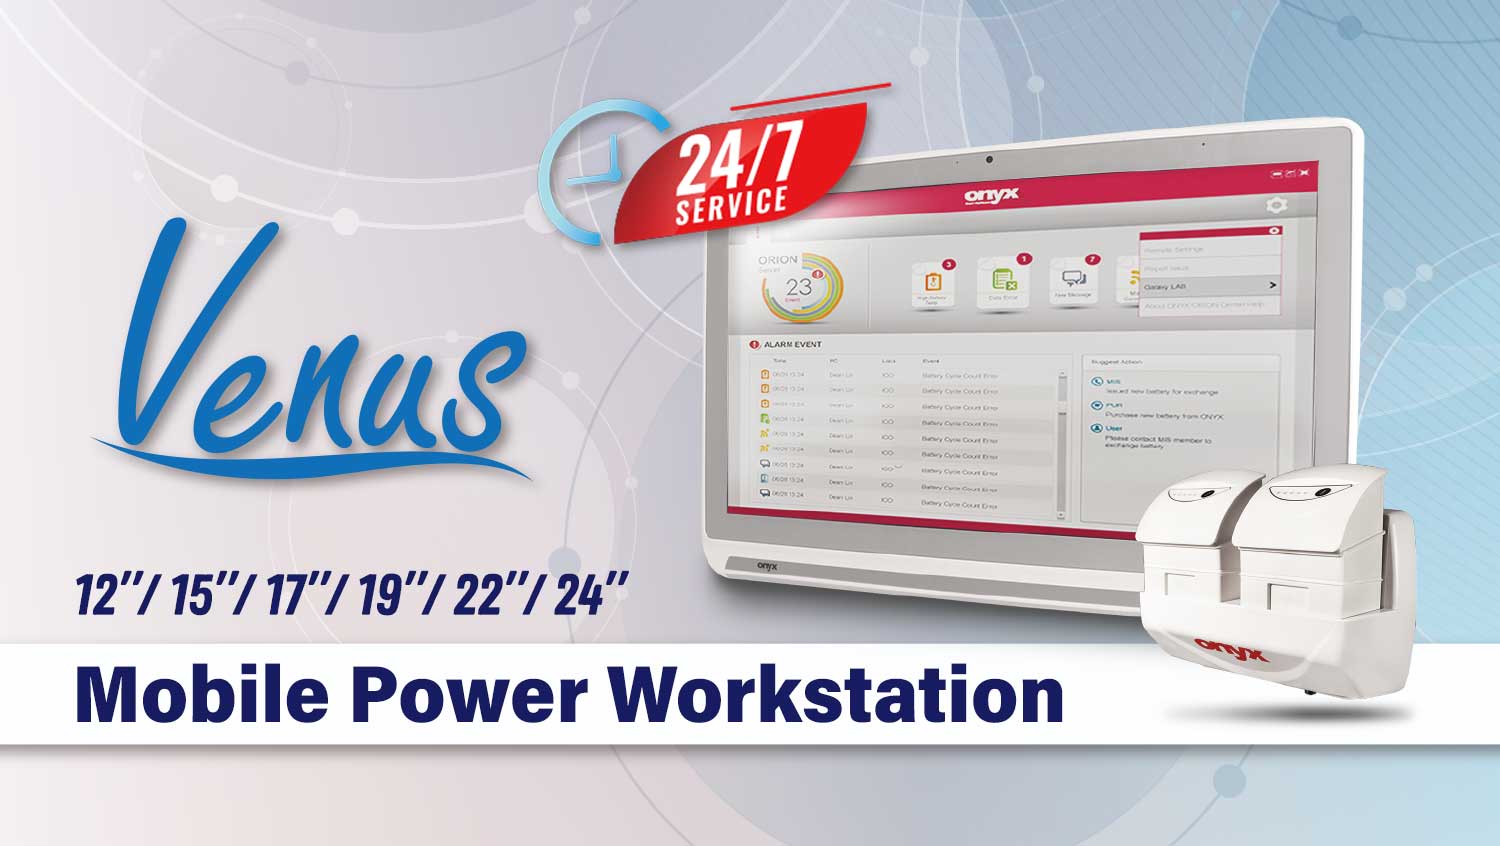 Venus-Mobile Power Workstation